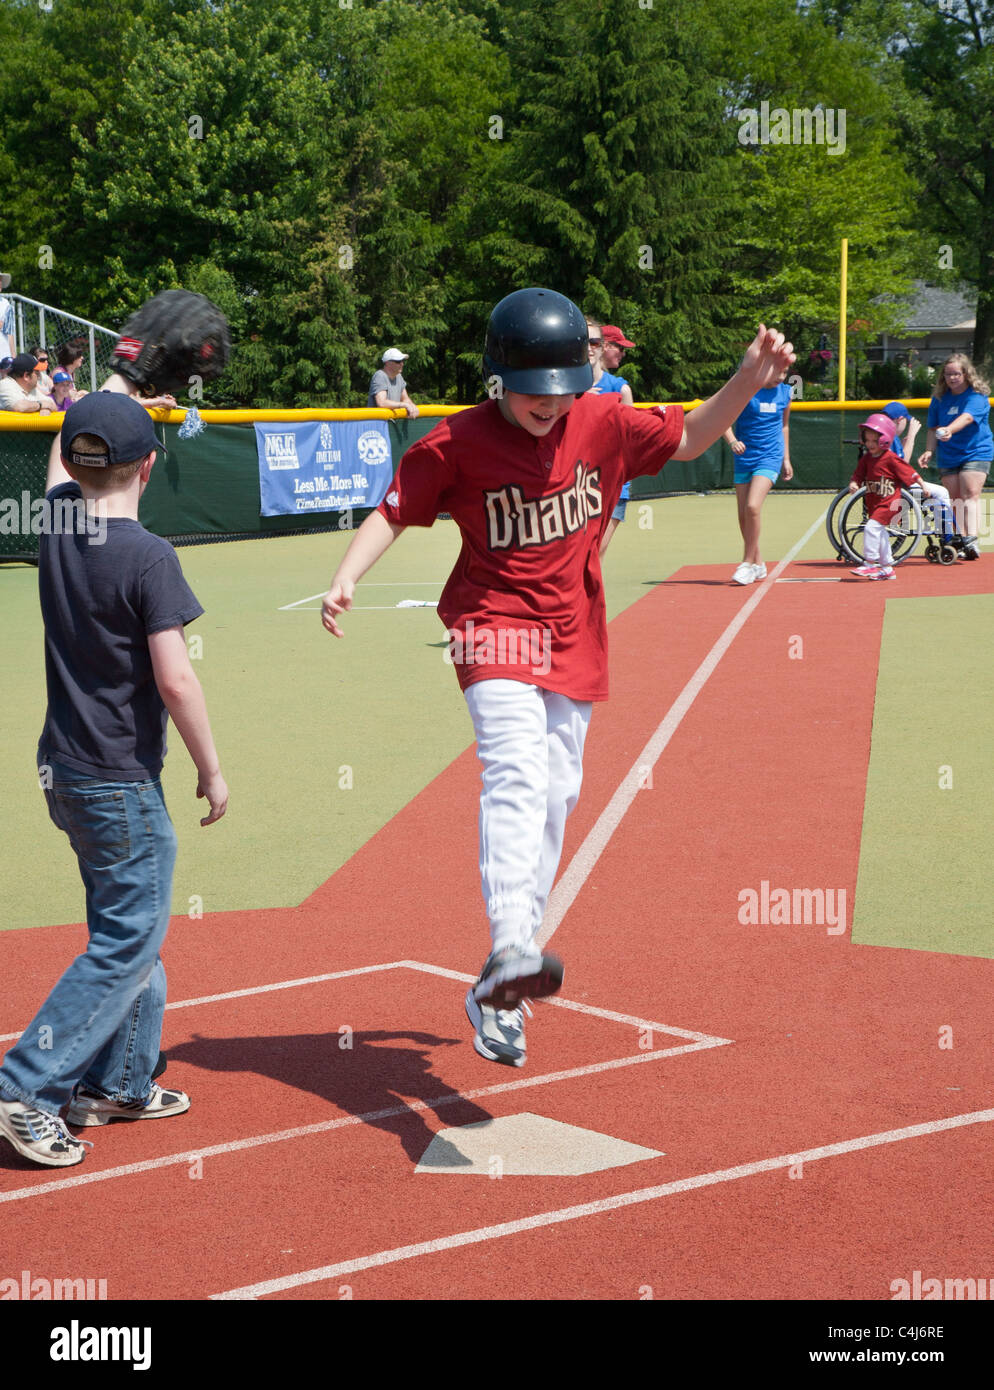 Behinderte Kinder spielen Baseball in der Wunder-Liga. Stockfoto